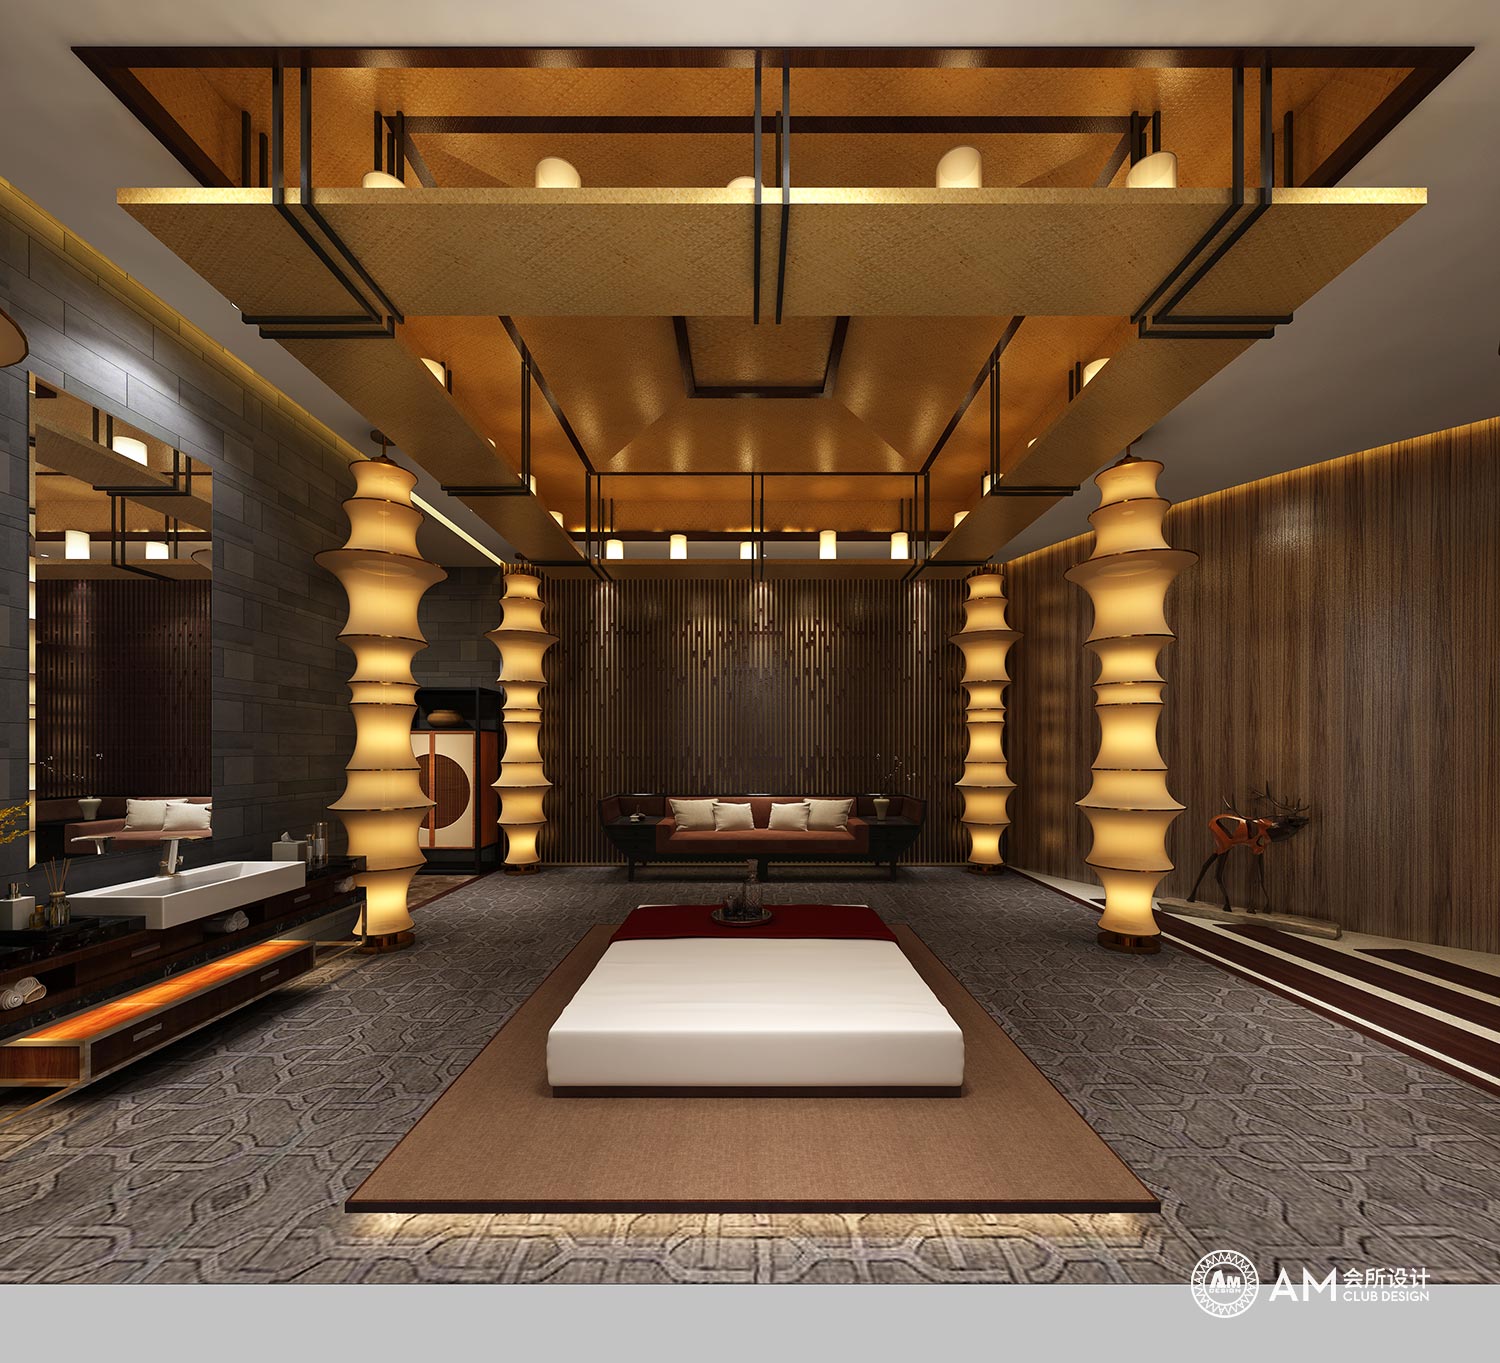 AM DESIGN | Spa room design of Tianjun No.7 Top Spa Club